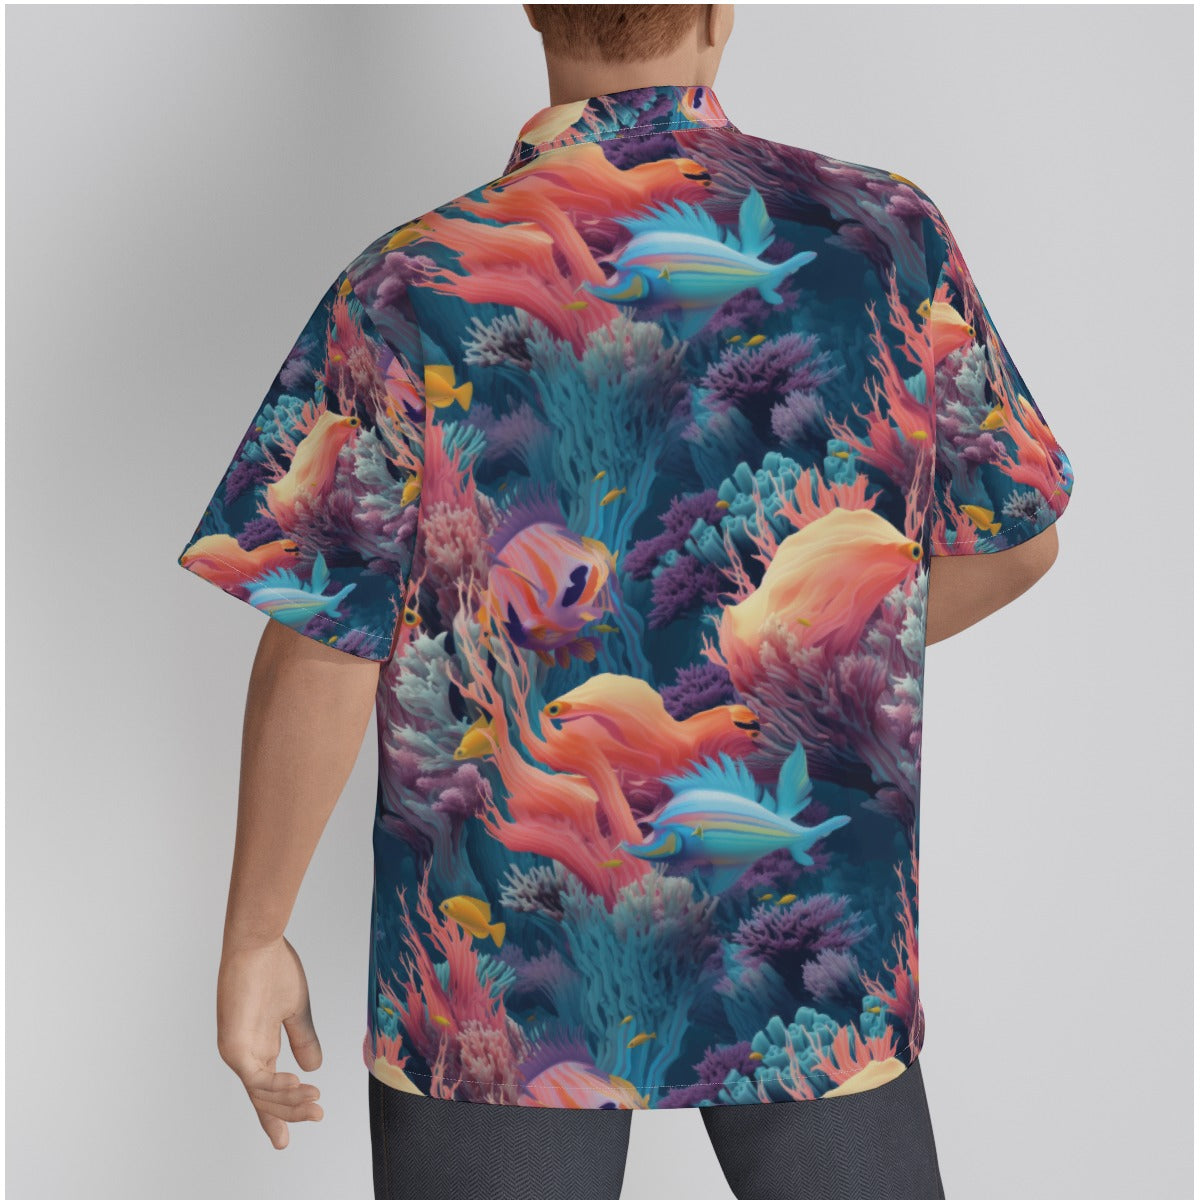 The Coral Reef Men's Hawaiian Shirt